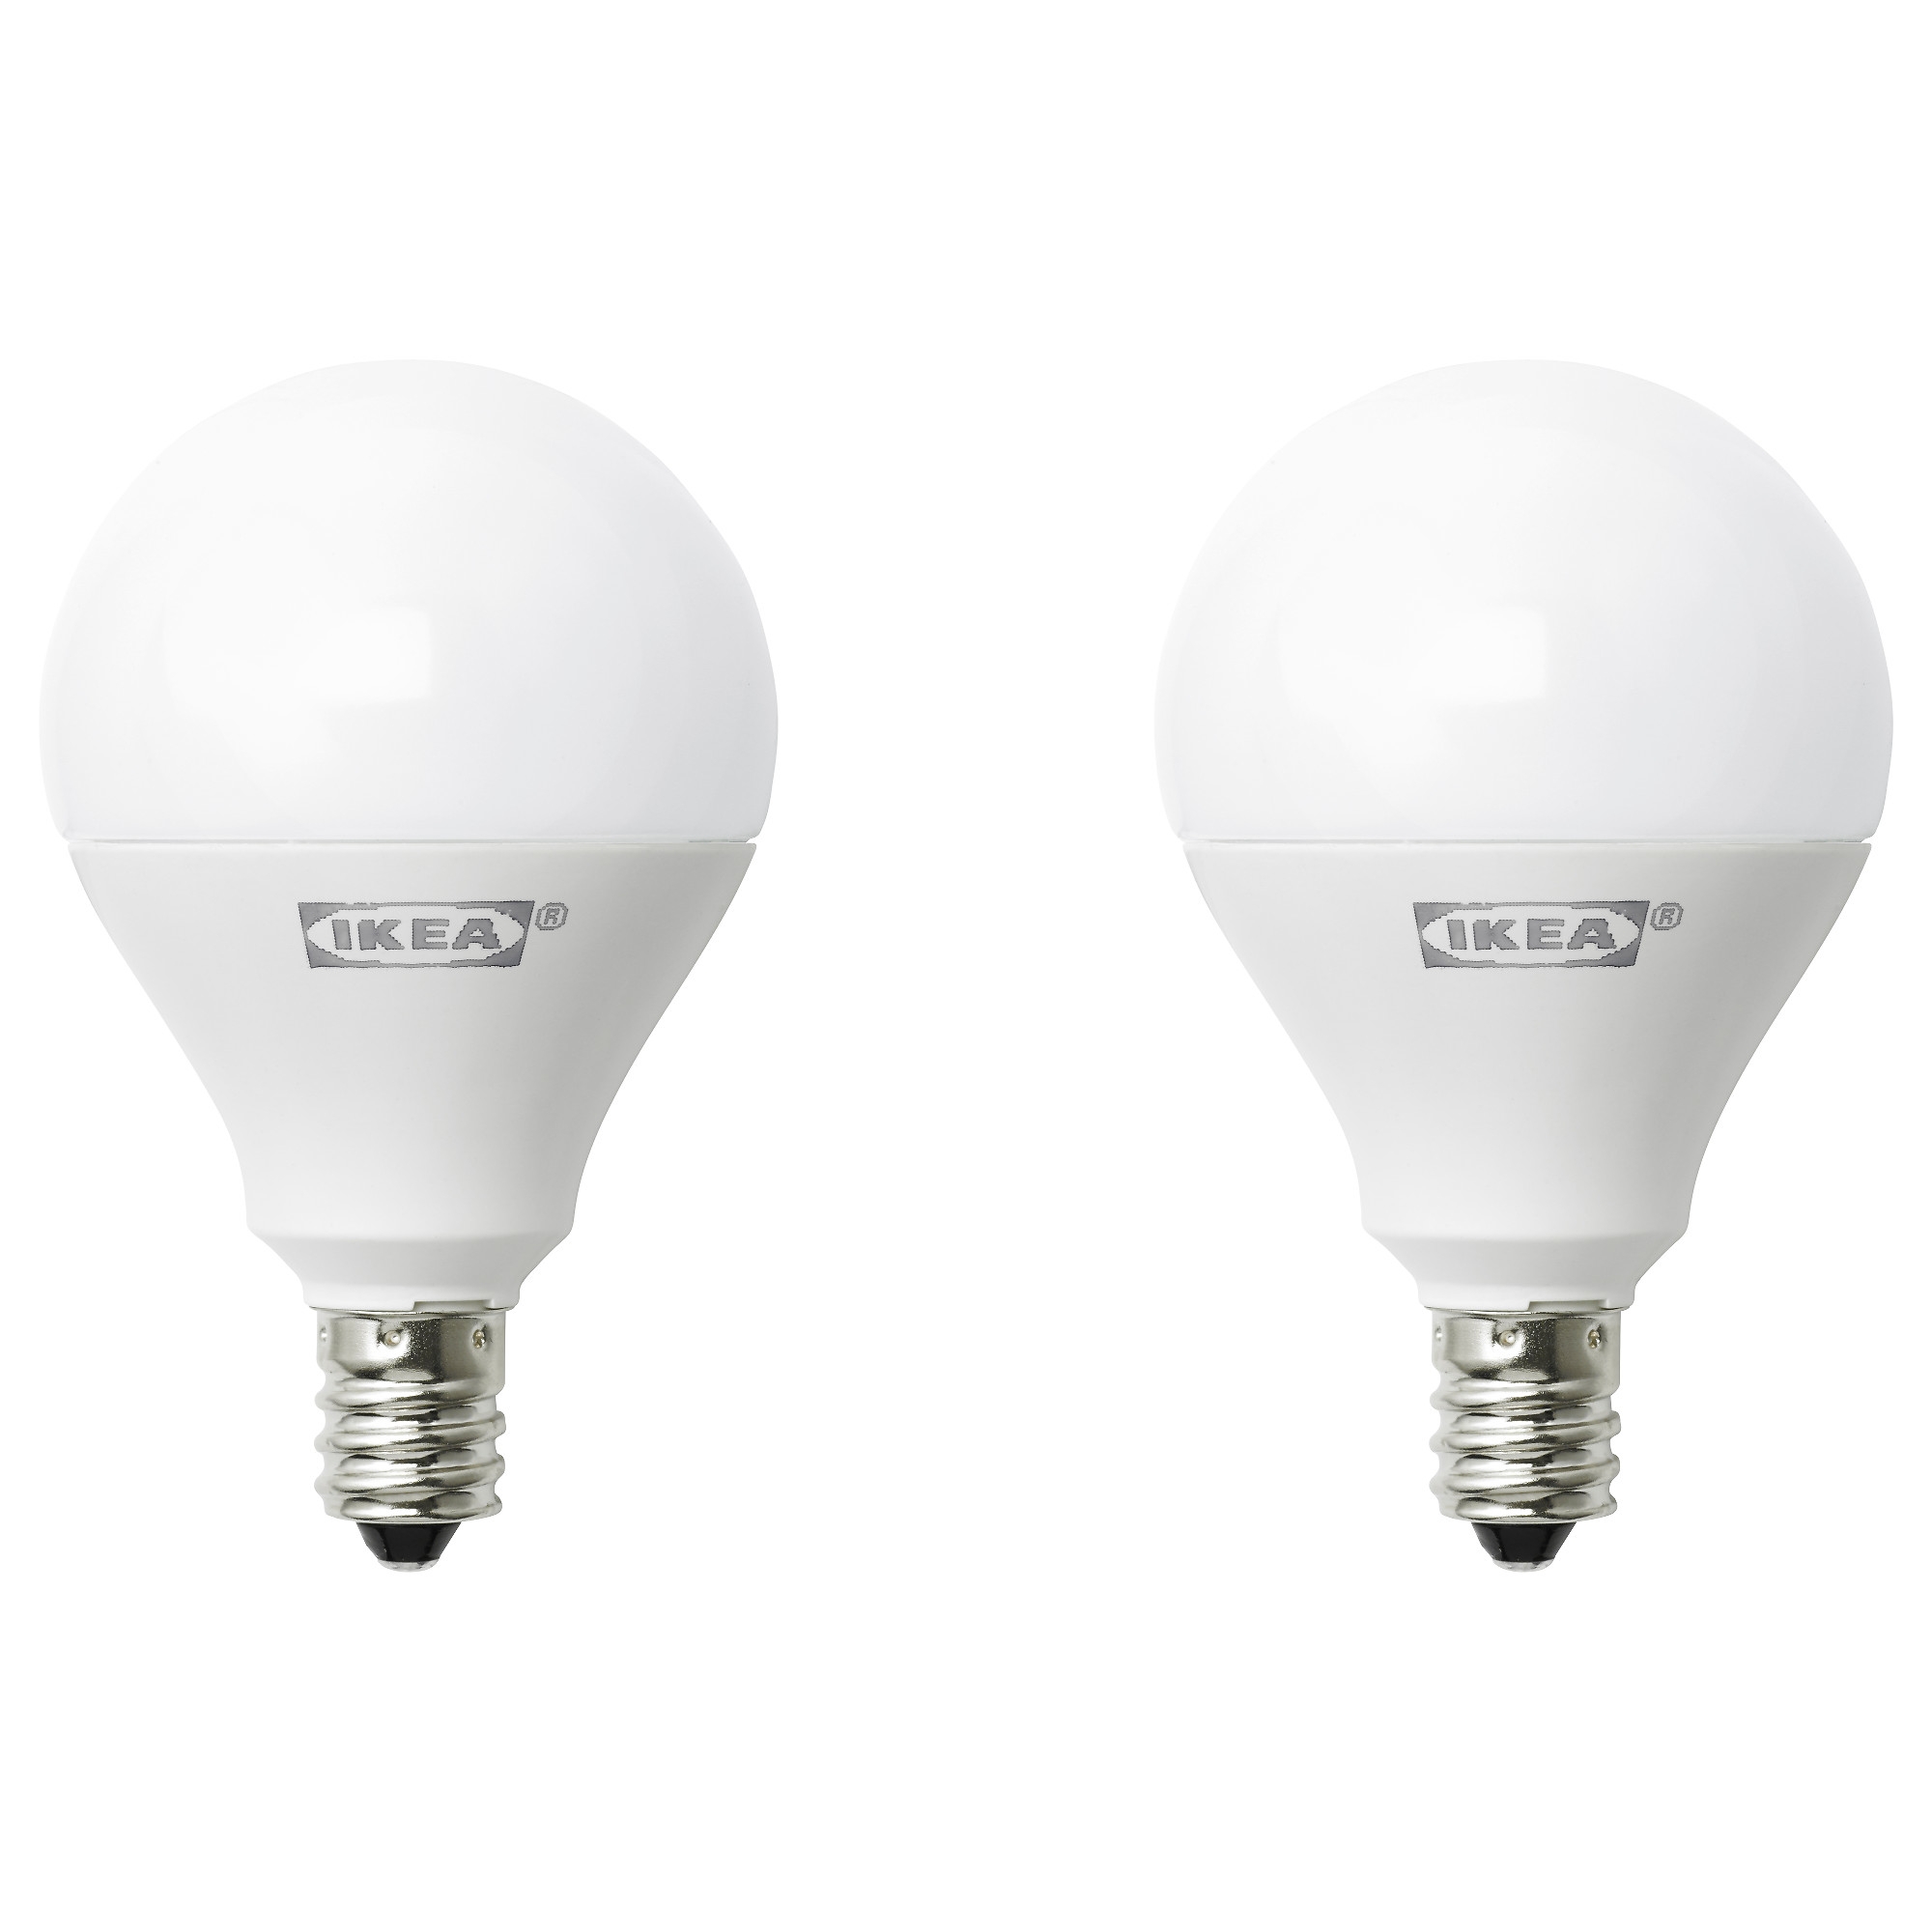 Energy Saving Ceiling Fan Light Bulbstop 213 complaints and reviews about ge light bulbs energy saving